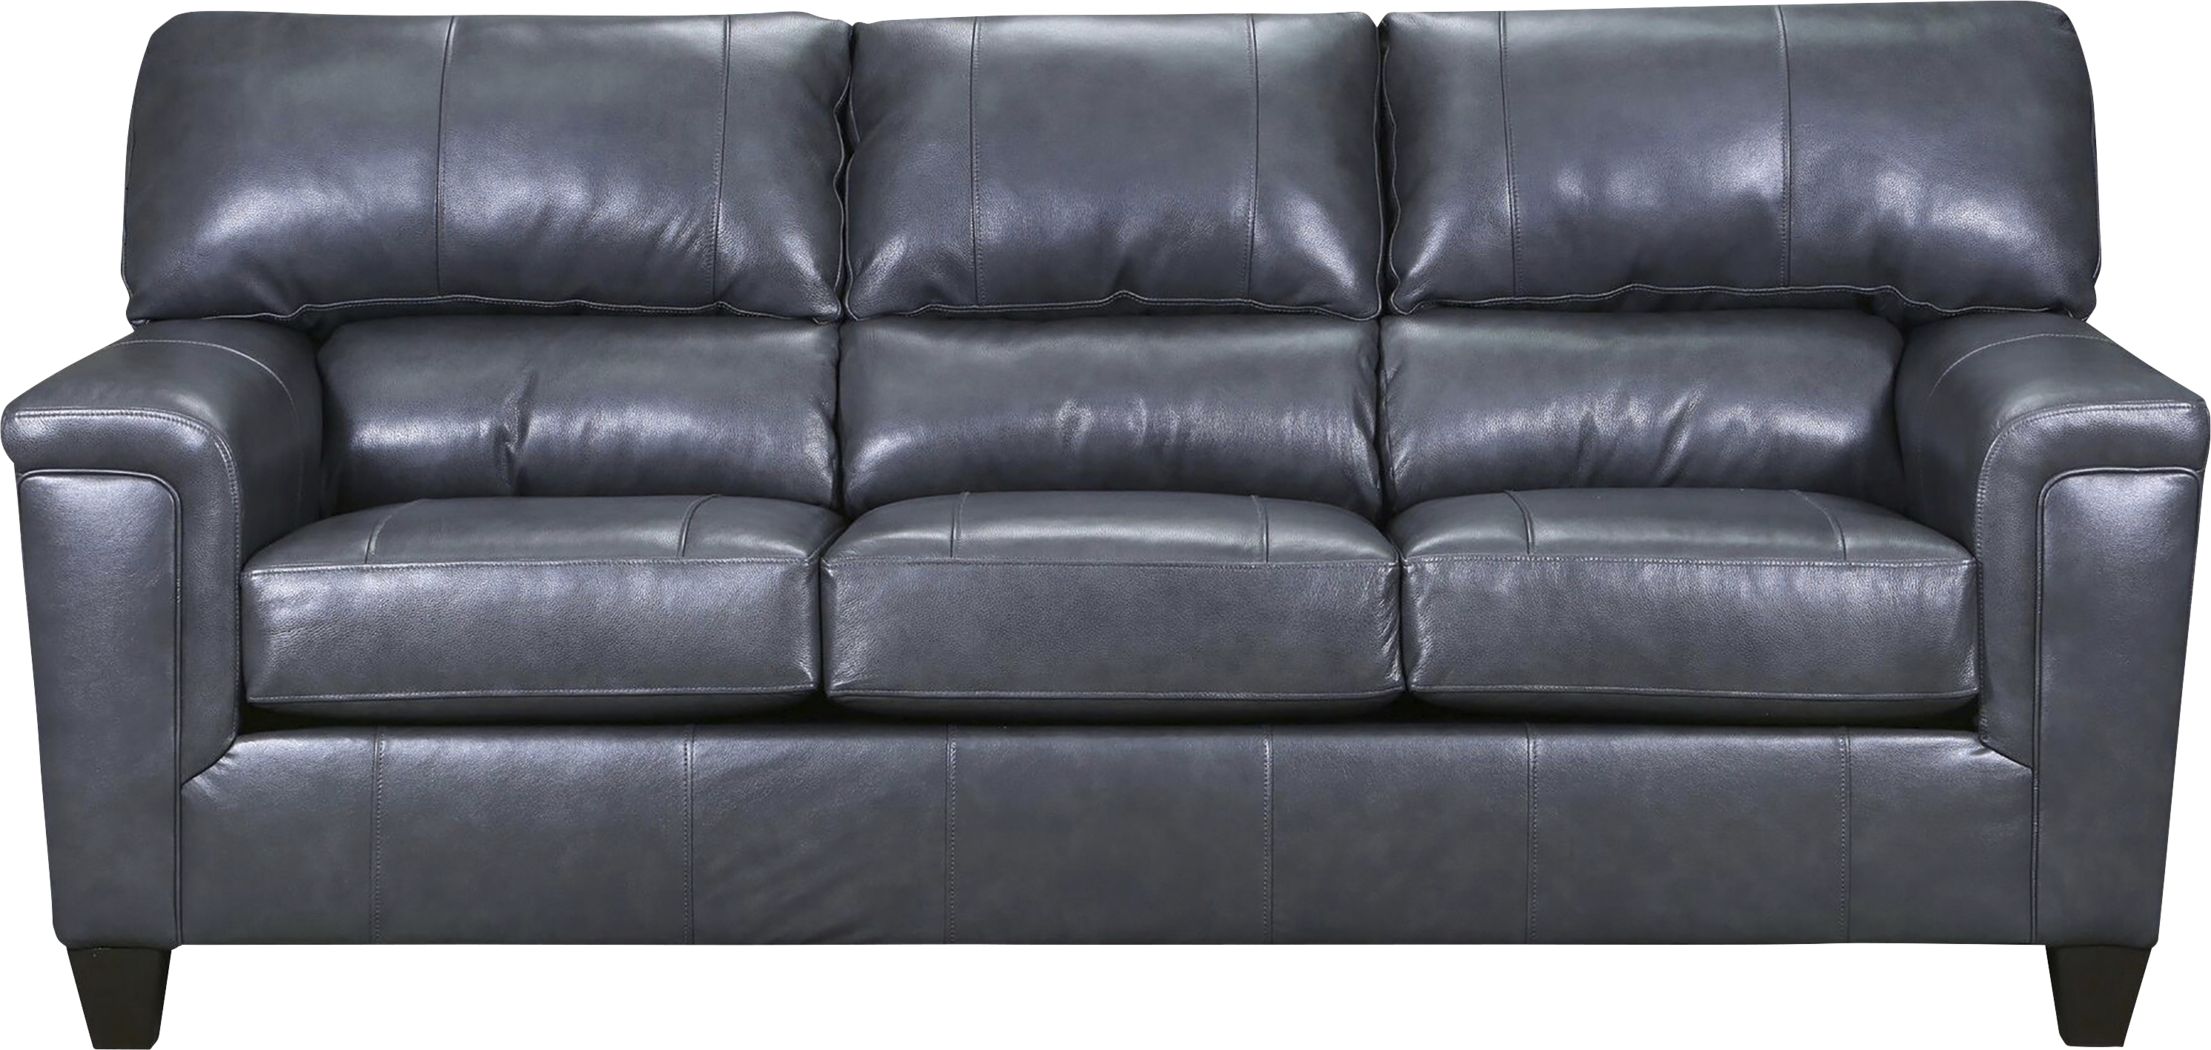 Leather Living Room Furniture, Leather Furniture Orlando Fl